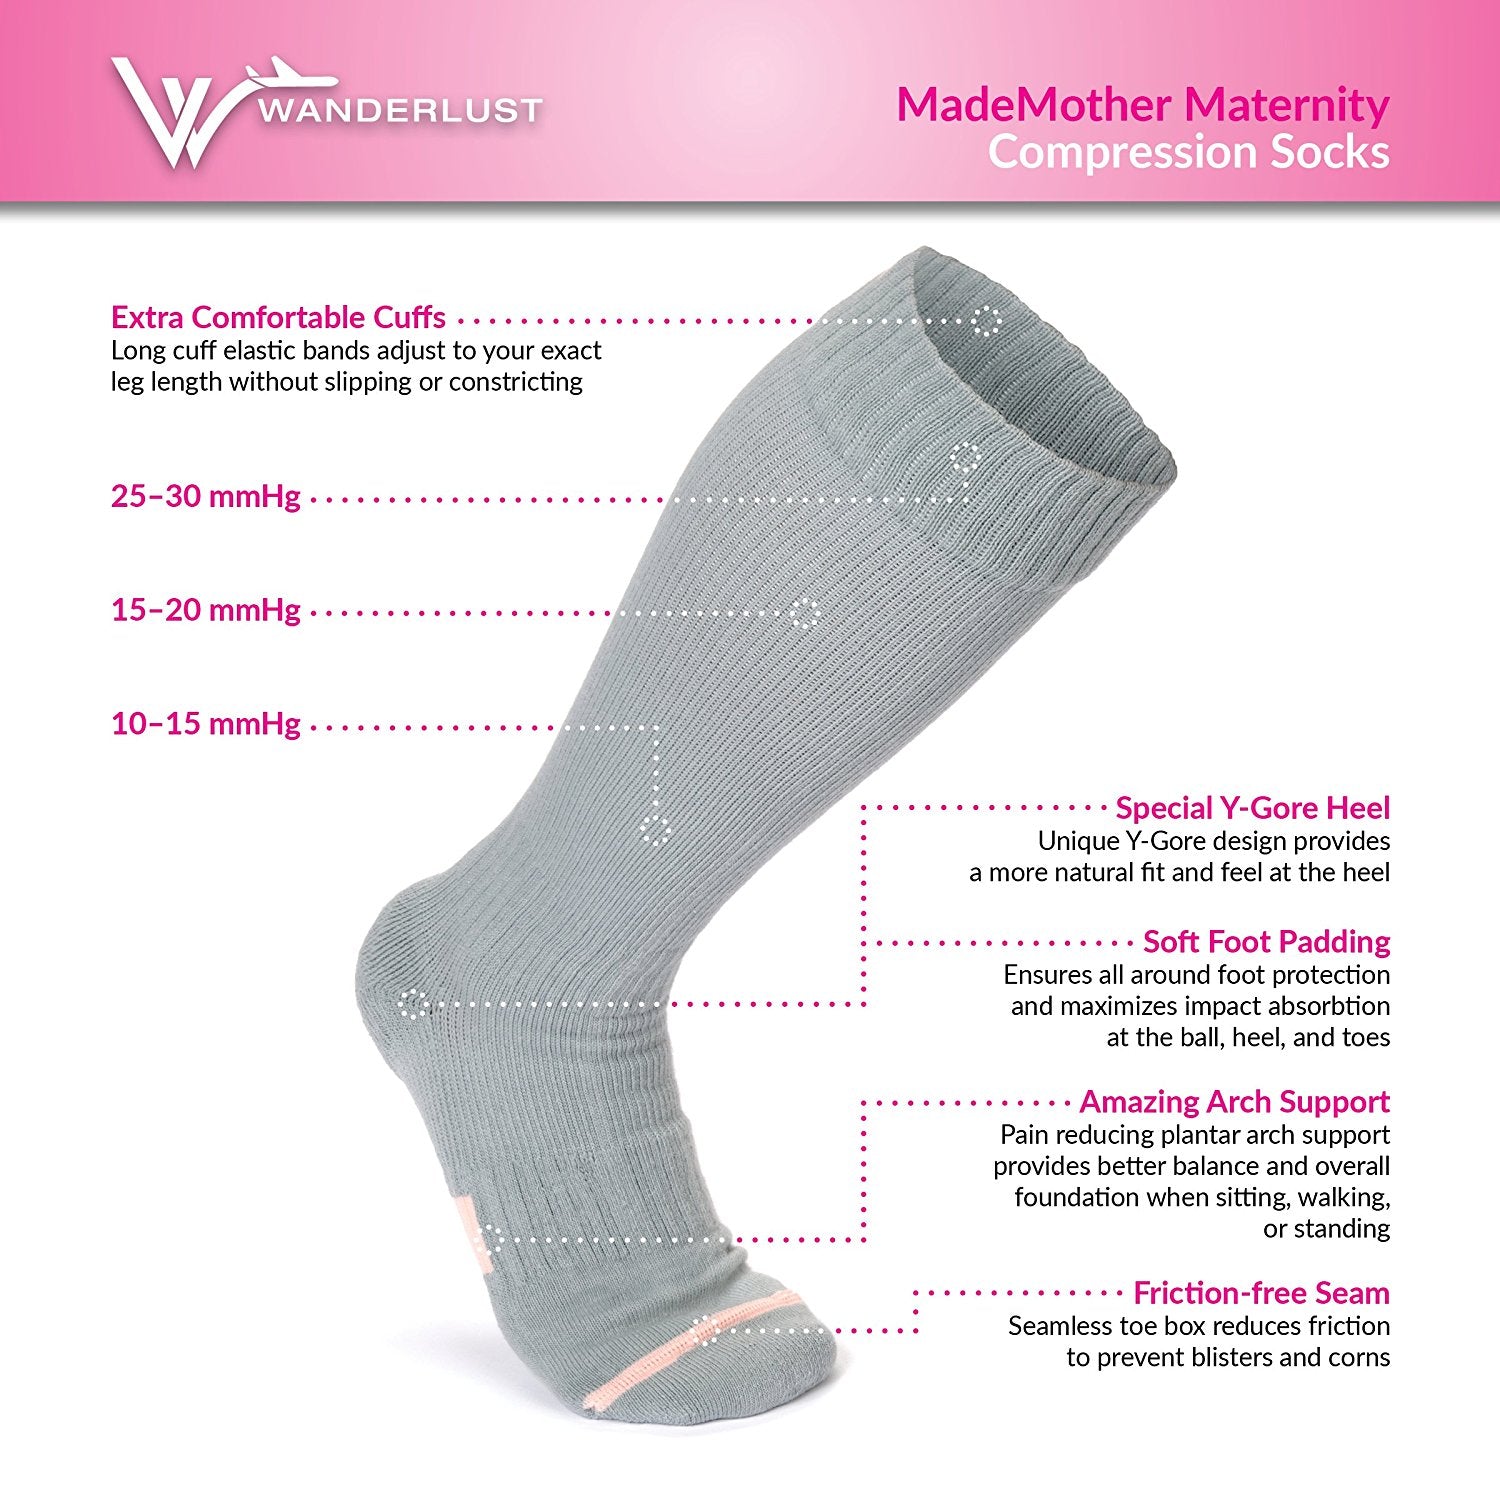 Maternity Compression Socks - Key benefits